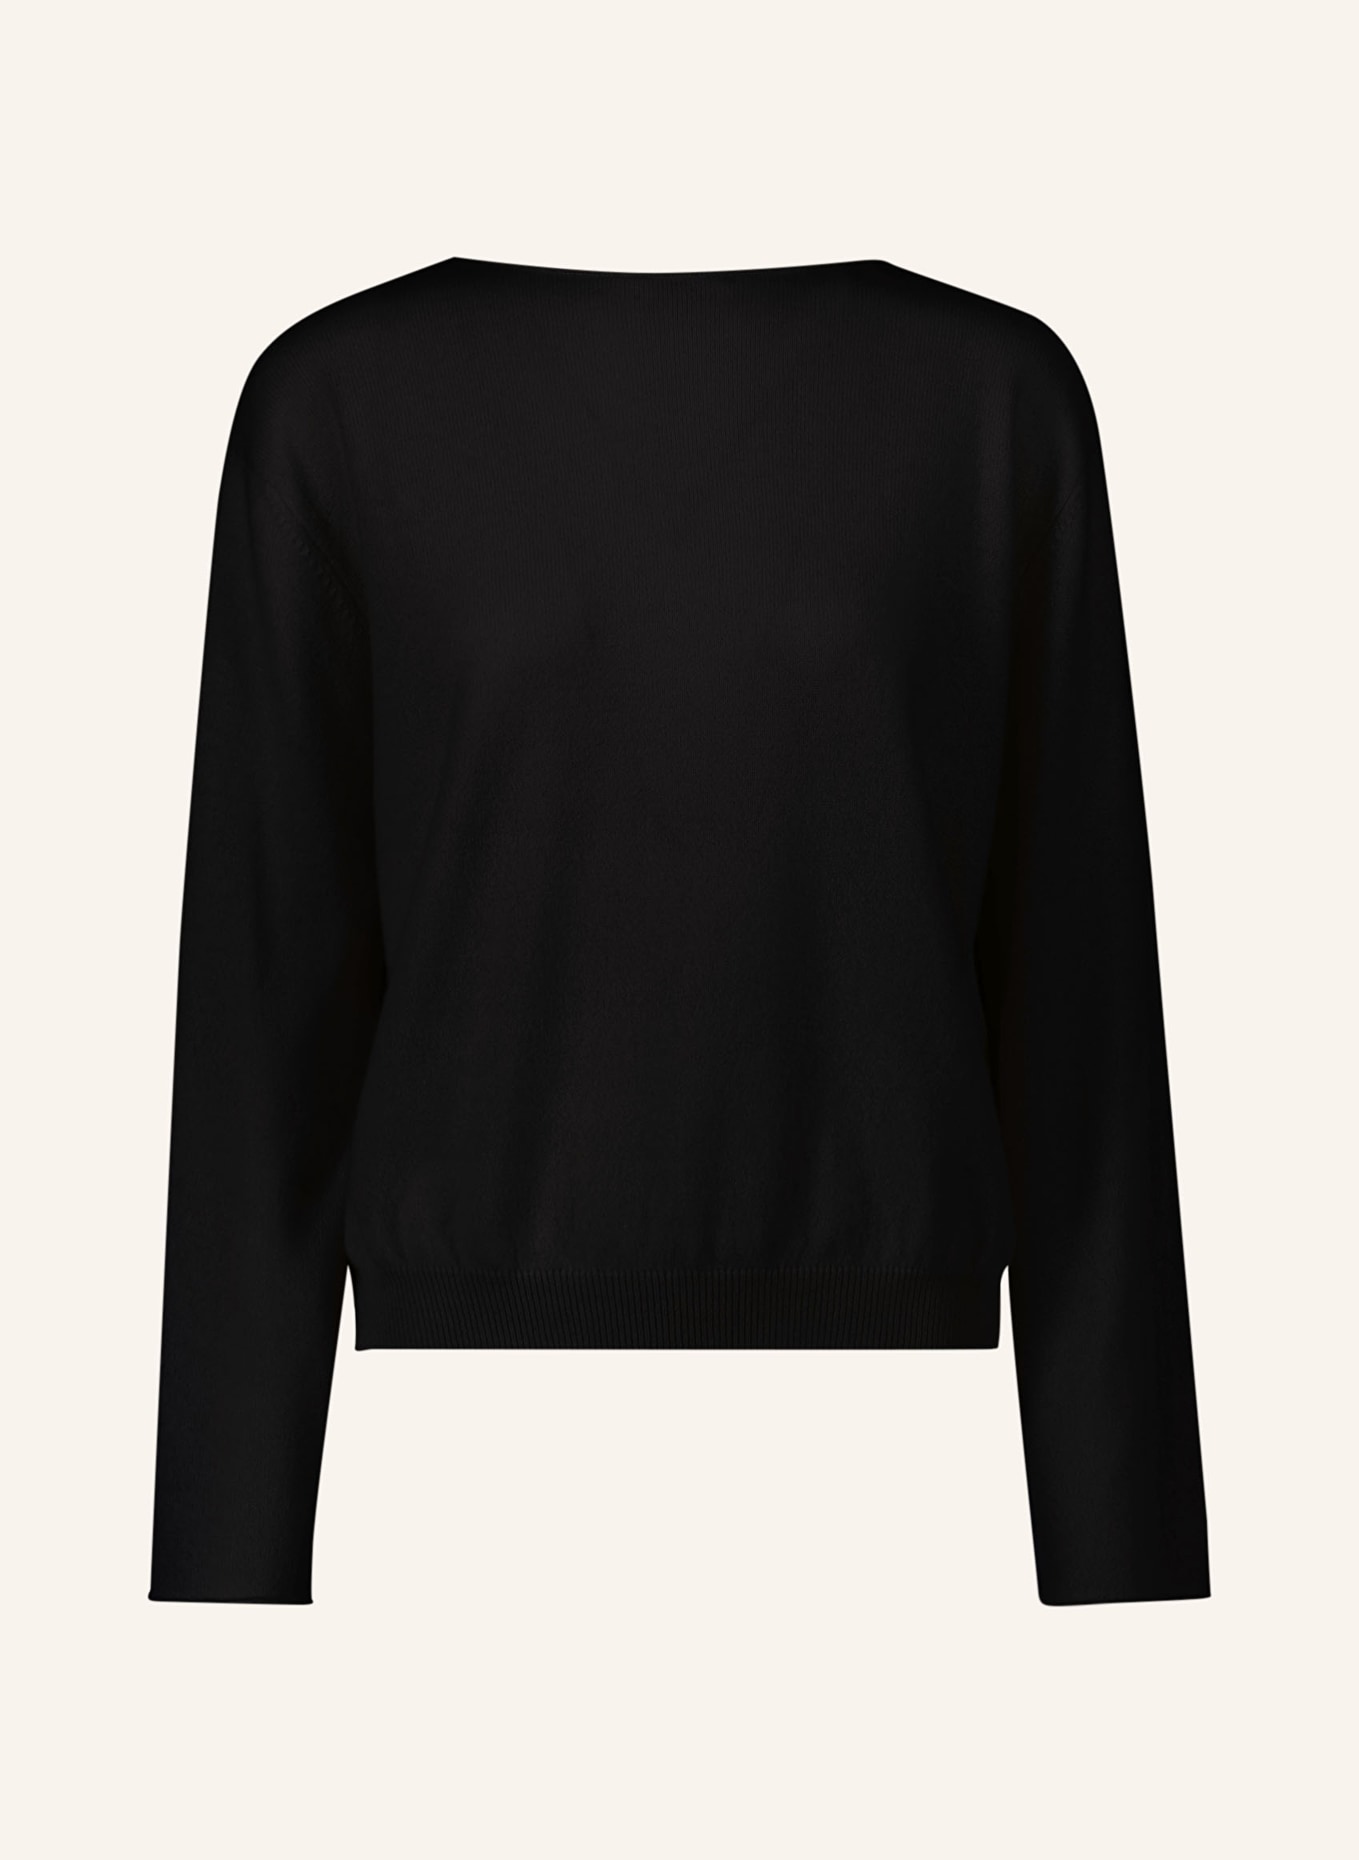 ALLUDE Cashmere sweater, Color: BLACK (Image 1)